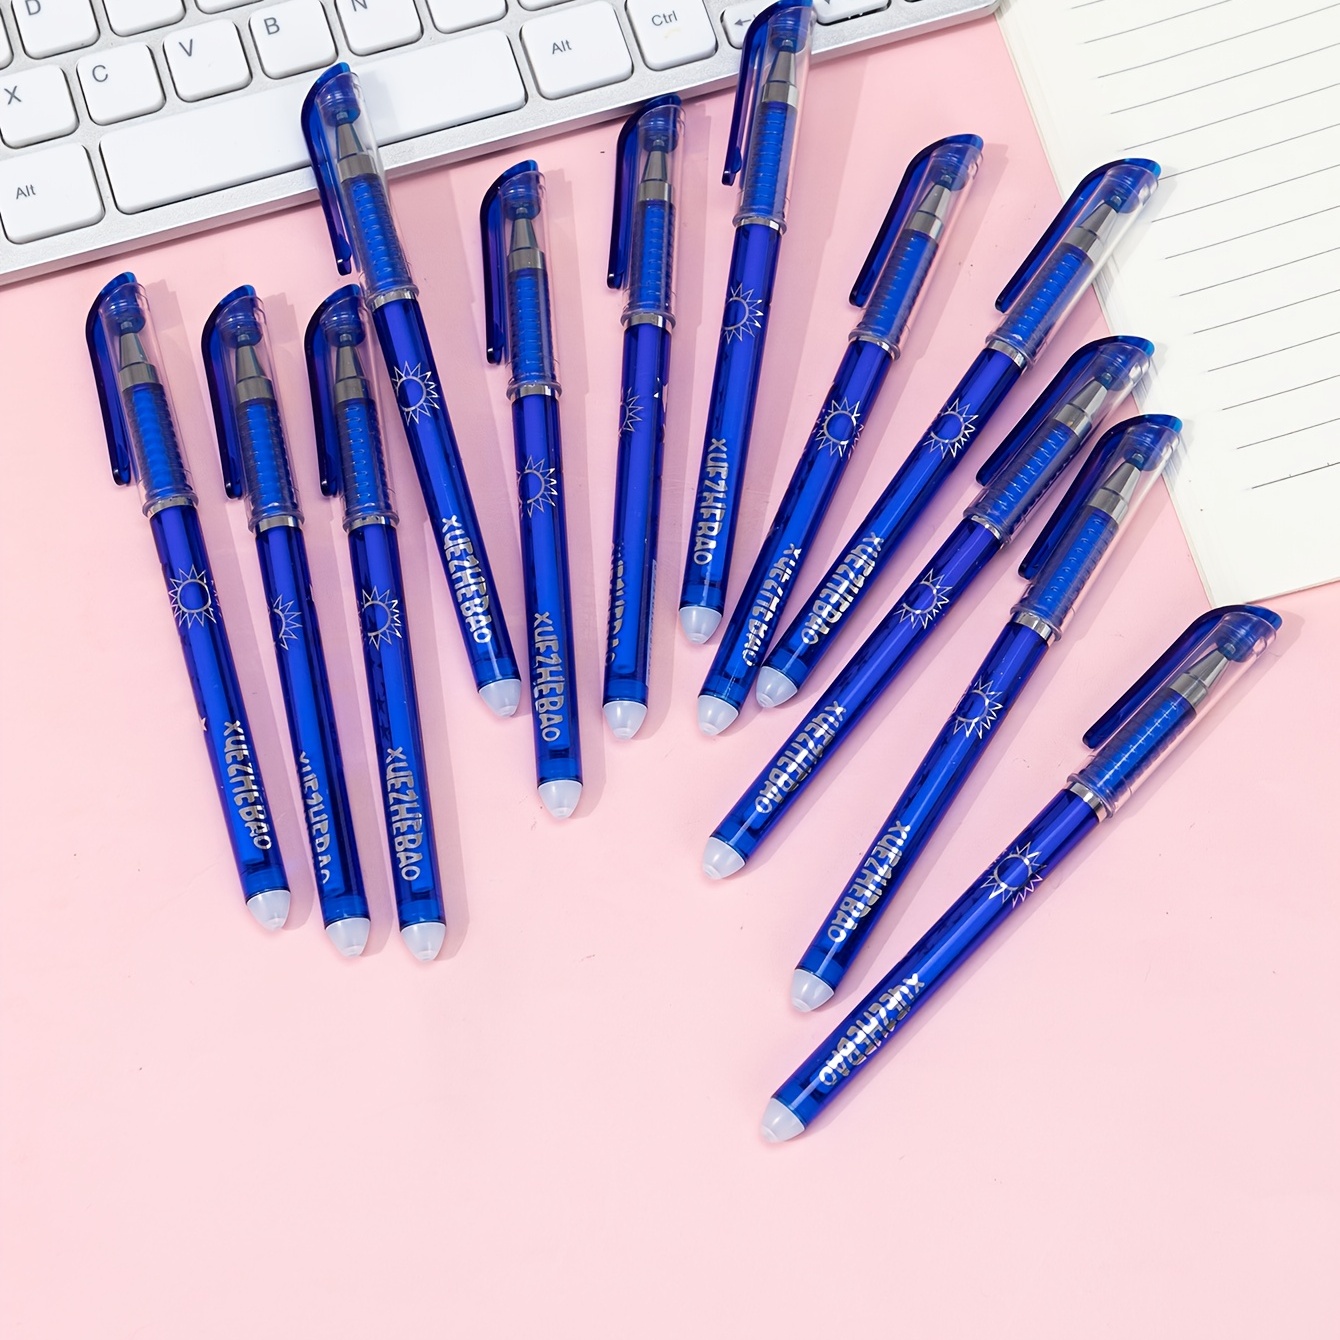 12pcs Blue 0.5mm Gel Pens - Amazing Deals & Free Shipping!